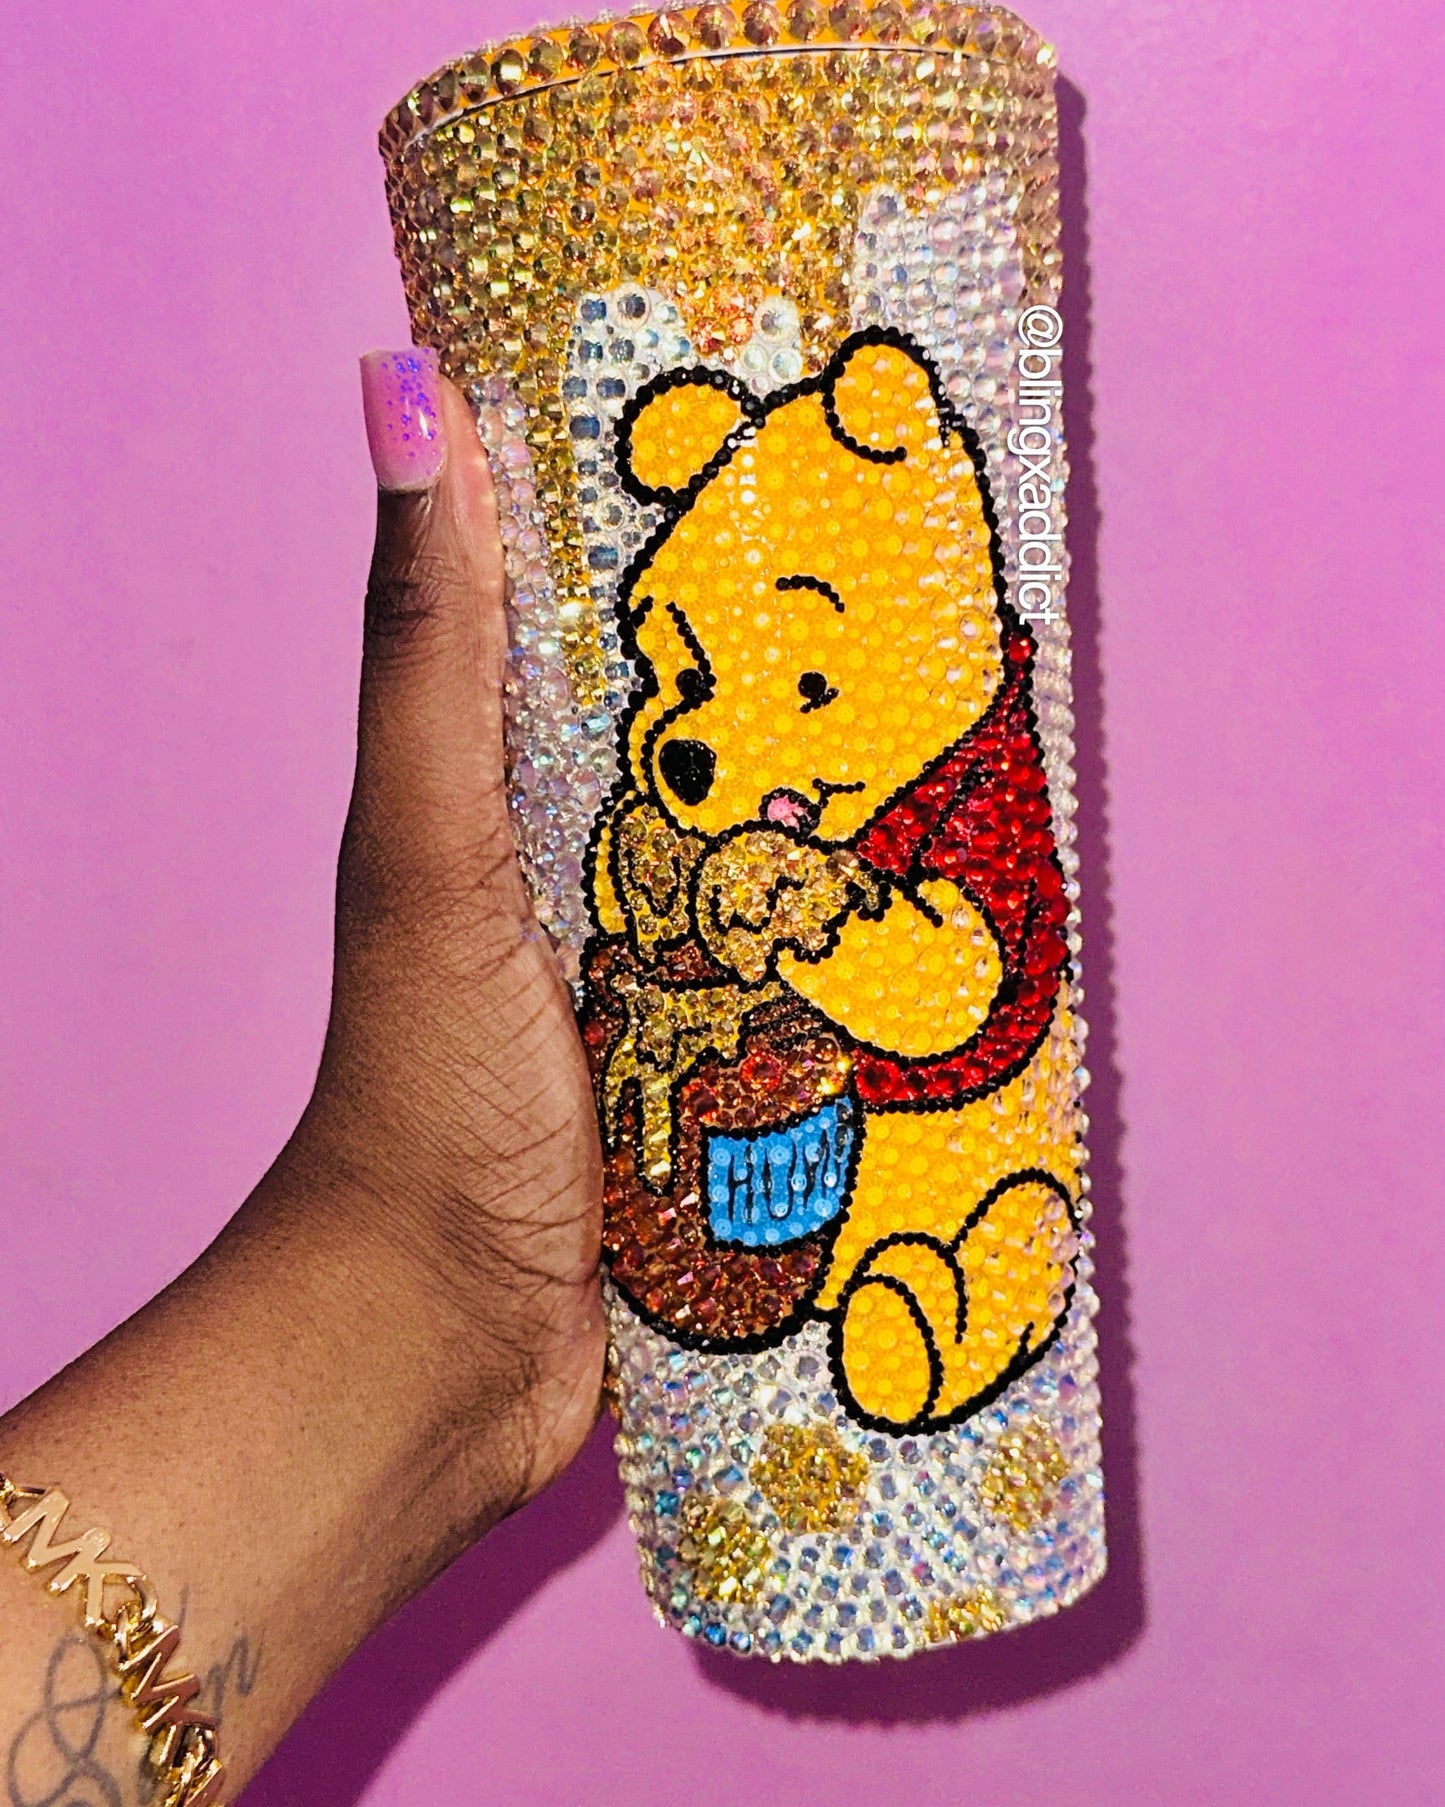 Winnie The Pooh Starbucks Bling Tumbler Cup by Bling Addict | BlingxAddict